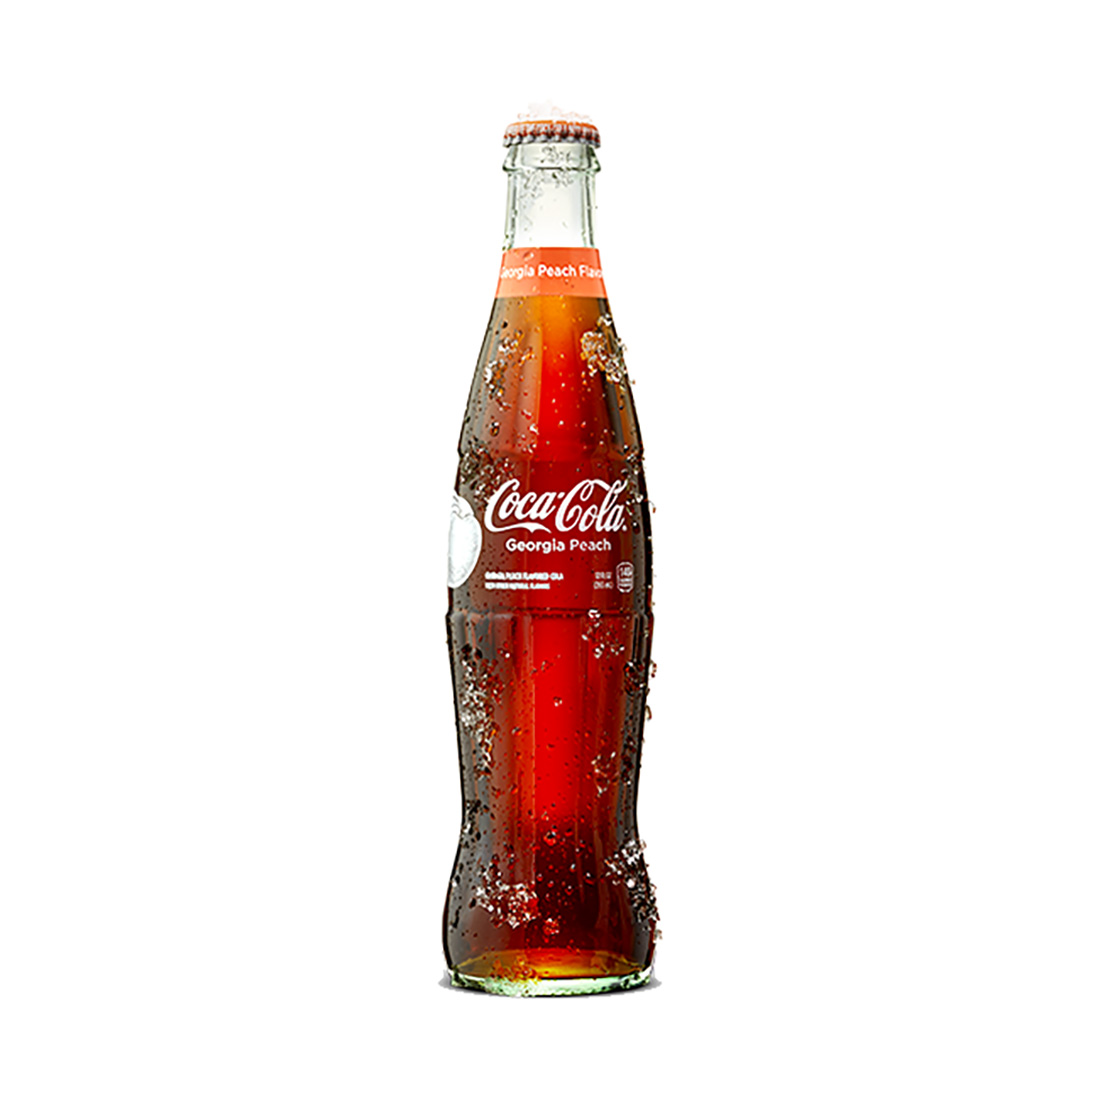 Coca-Cola Georgia Peach bottle